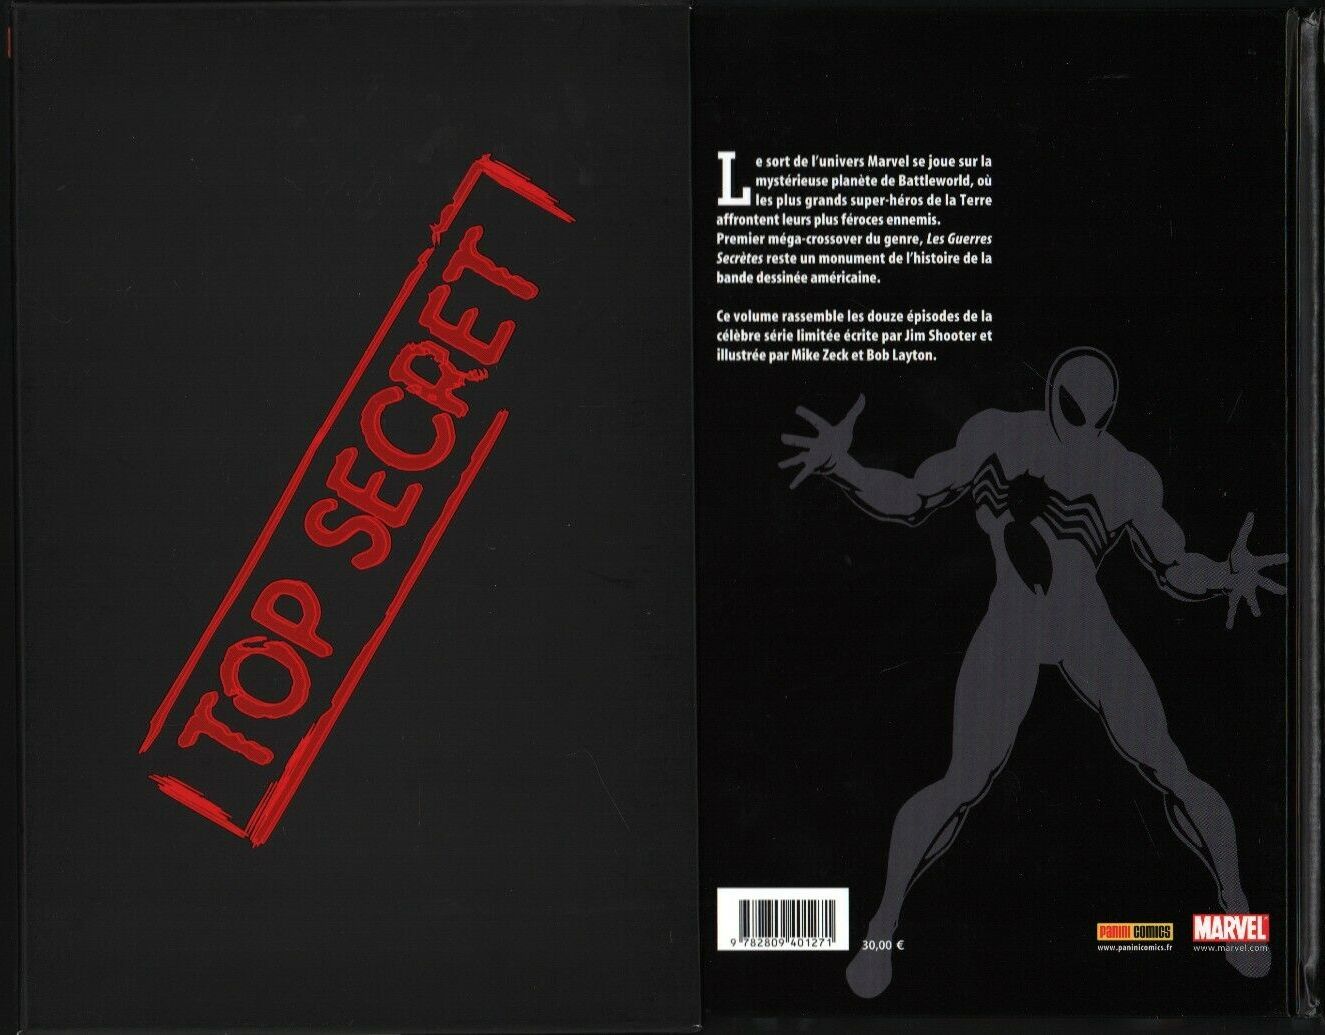 Verso de l'album Best of Marvel 12 Les guerres secrètes